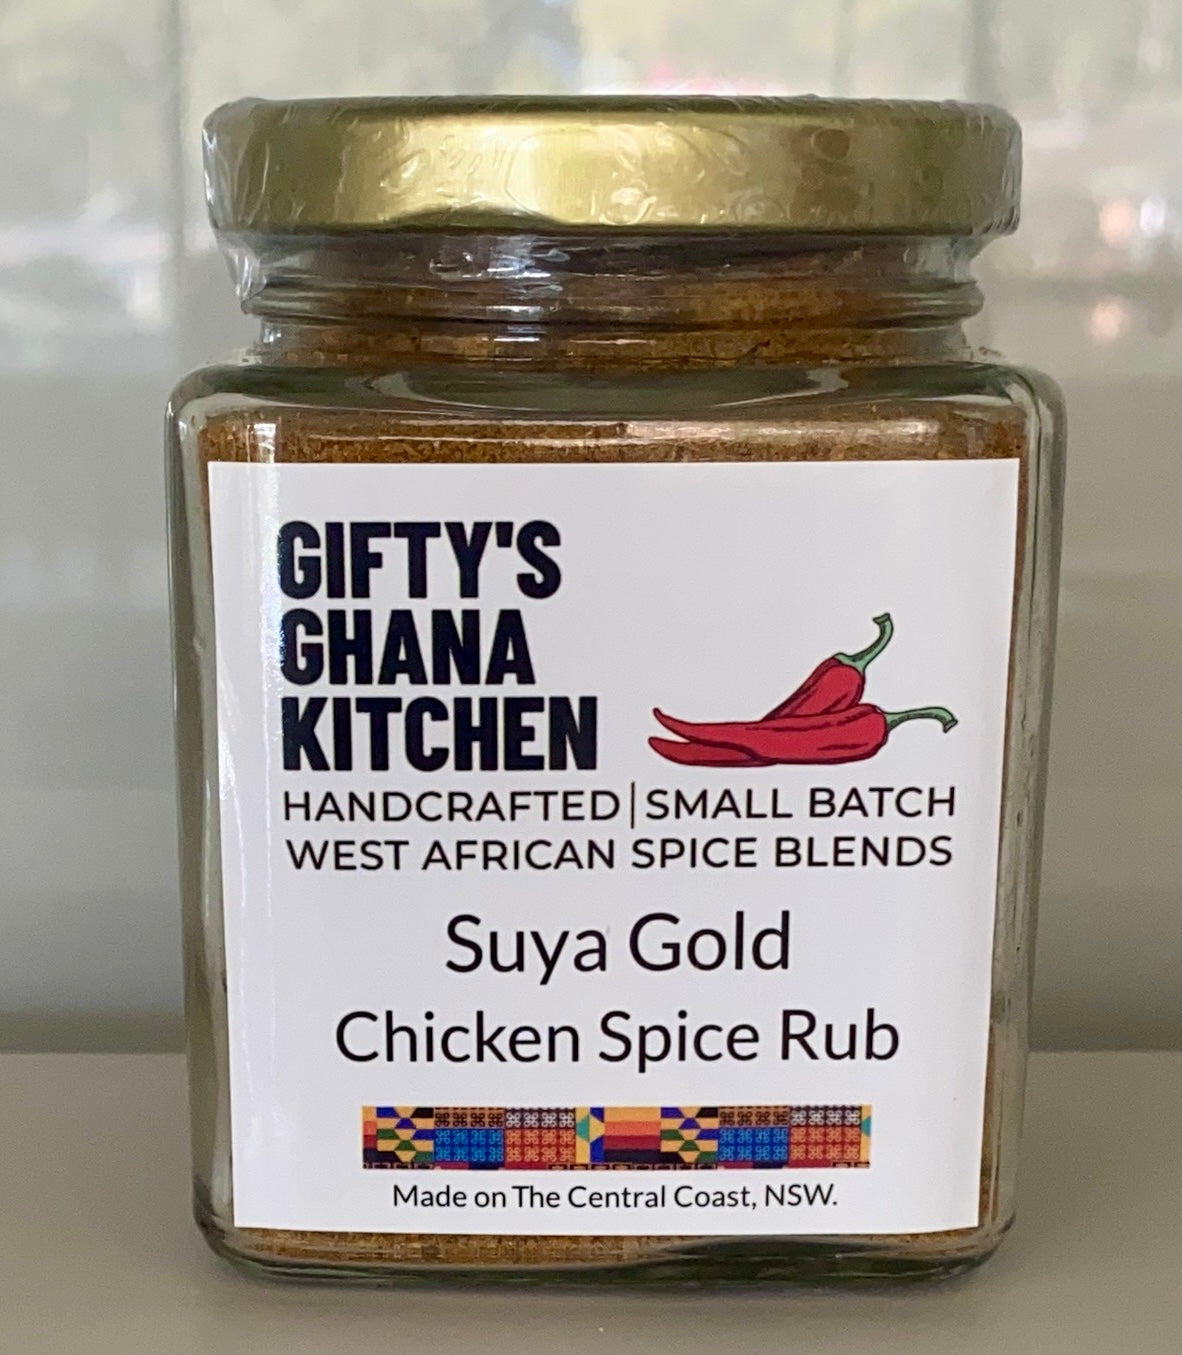 "SUYA GOLD" CHICKEN SPICE RUB - West African Spice Blend Gifty's Ghana Kitchen